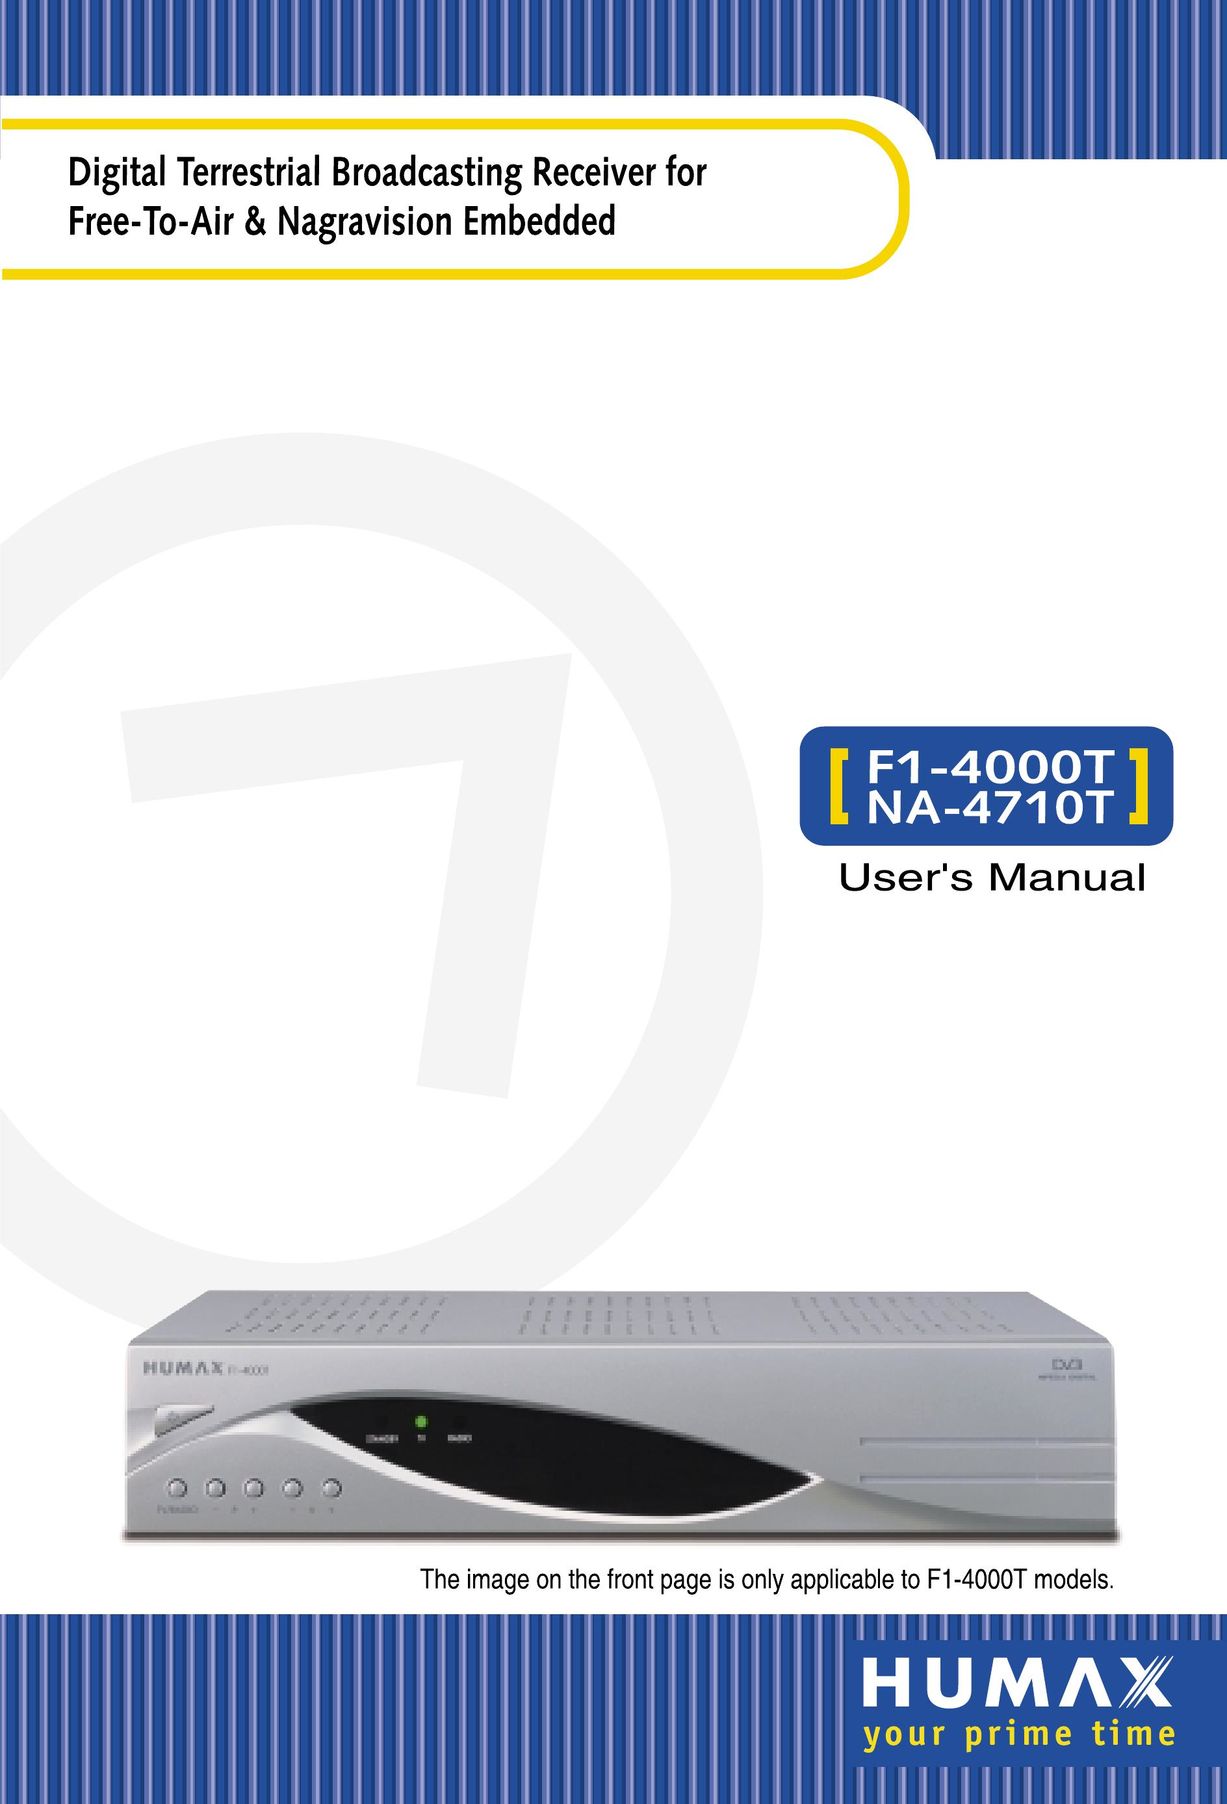 Humax F1-4000T TV Receiver User Manual